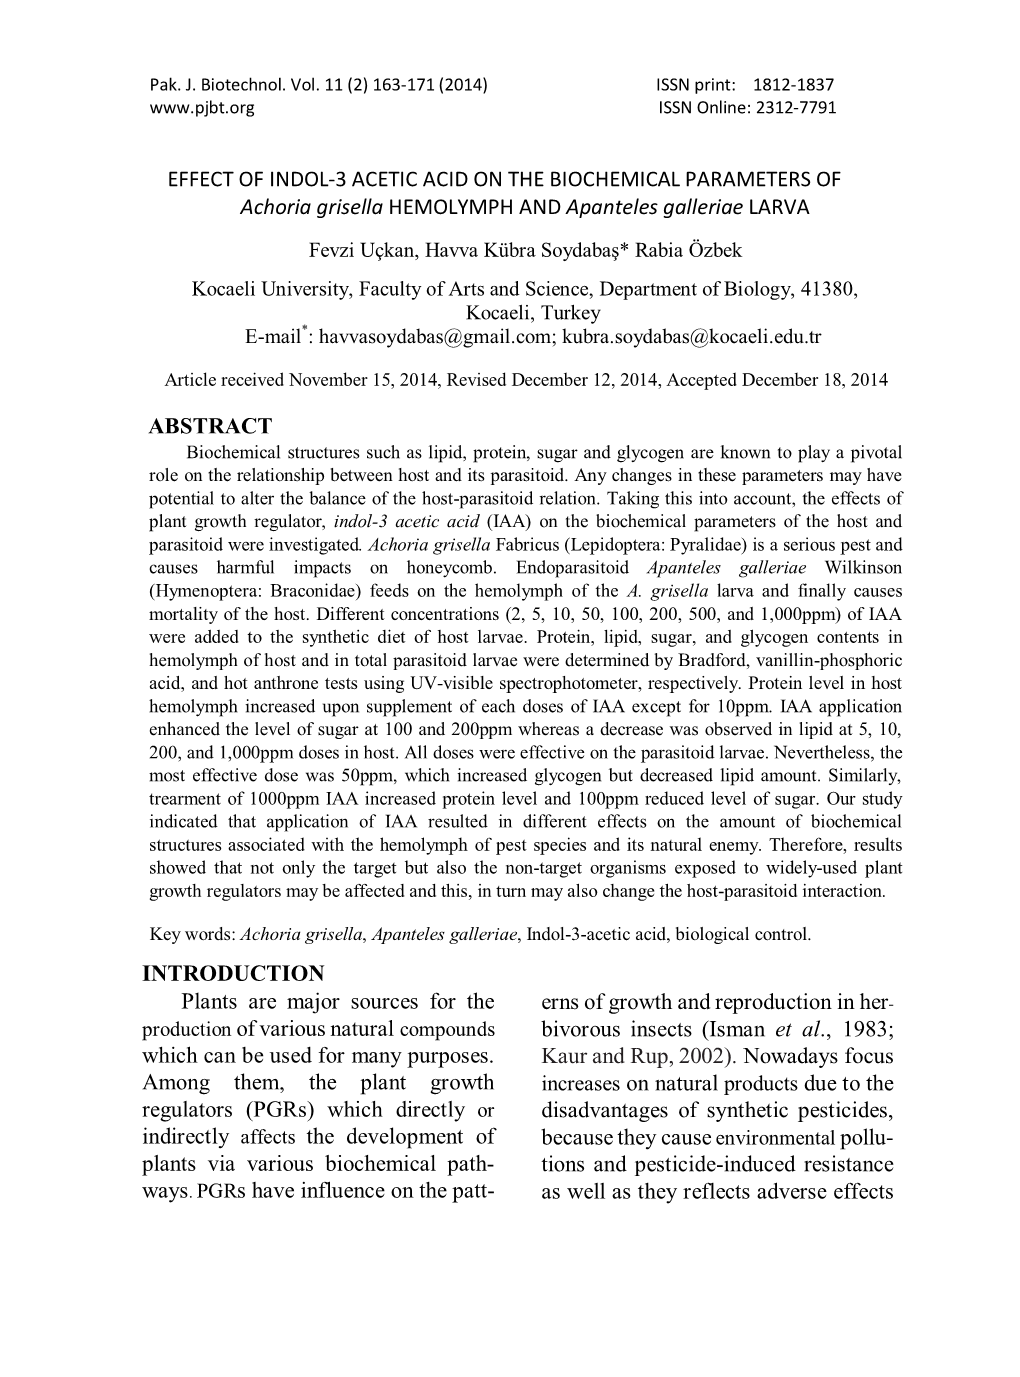 EFFECT of INDOL-3 ACETIC ACID on the BIOCHEMICAL PARAMETERS of Achoria Grisella HEMOLYMPH and Apanteles Galleriae LARVA